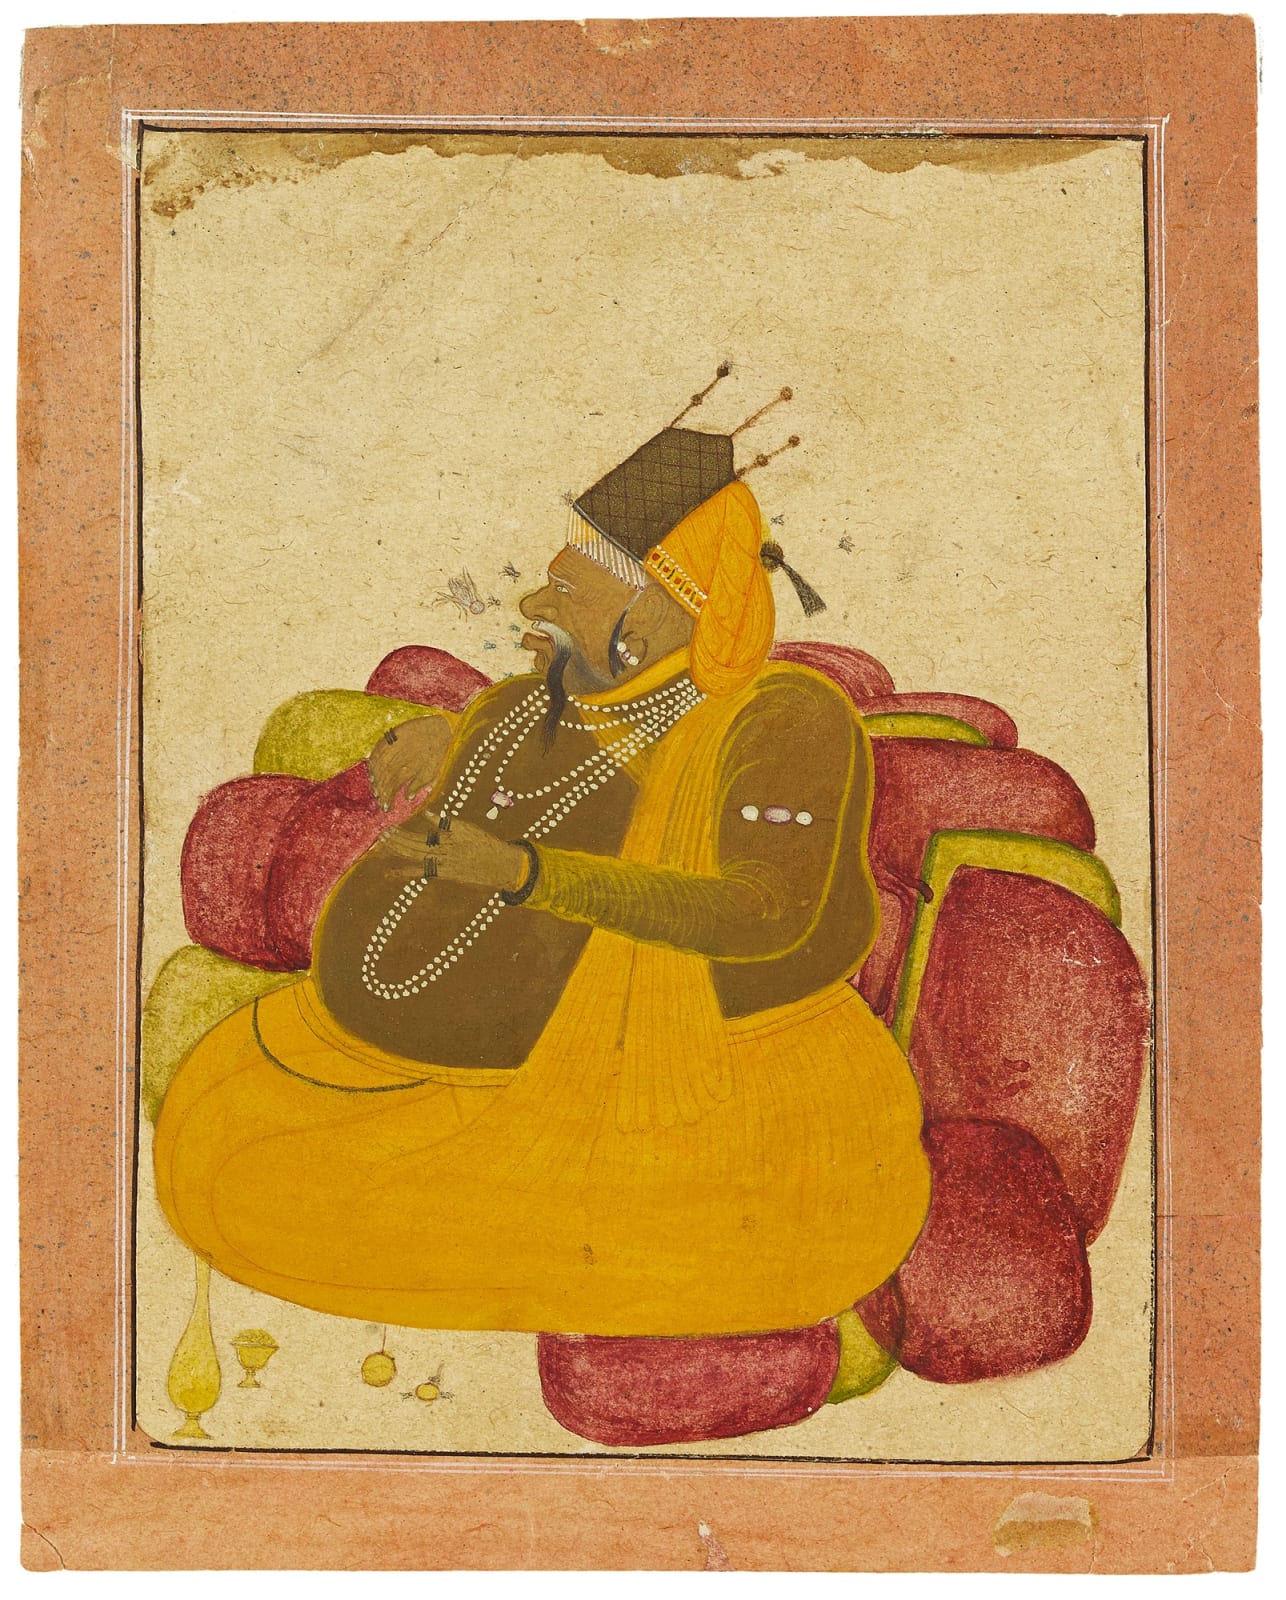 Rawal Sri Lakhan Singh as a Bridegroom, Ascribed to Ustad Ahmad son of Pir Bakhsh, Bikaner, 1733-34